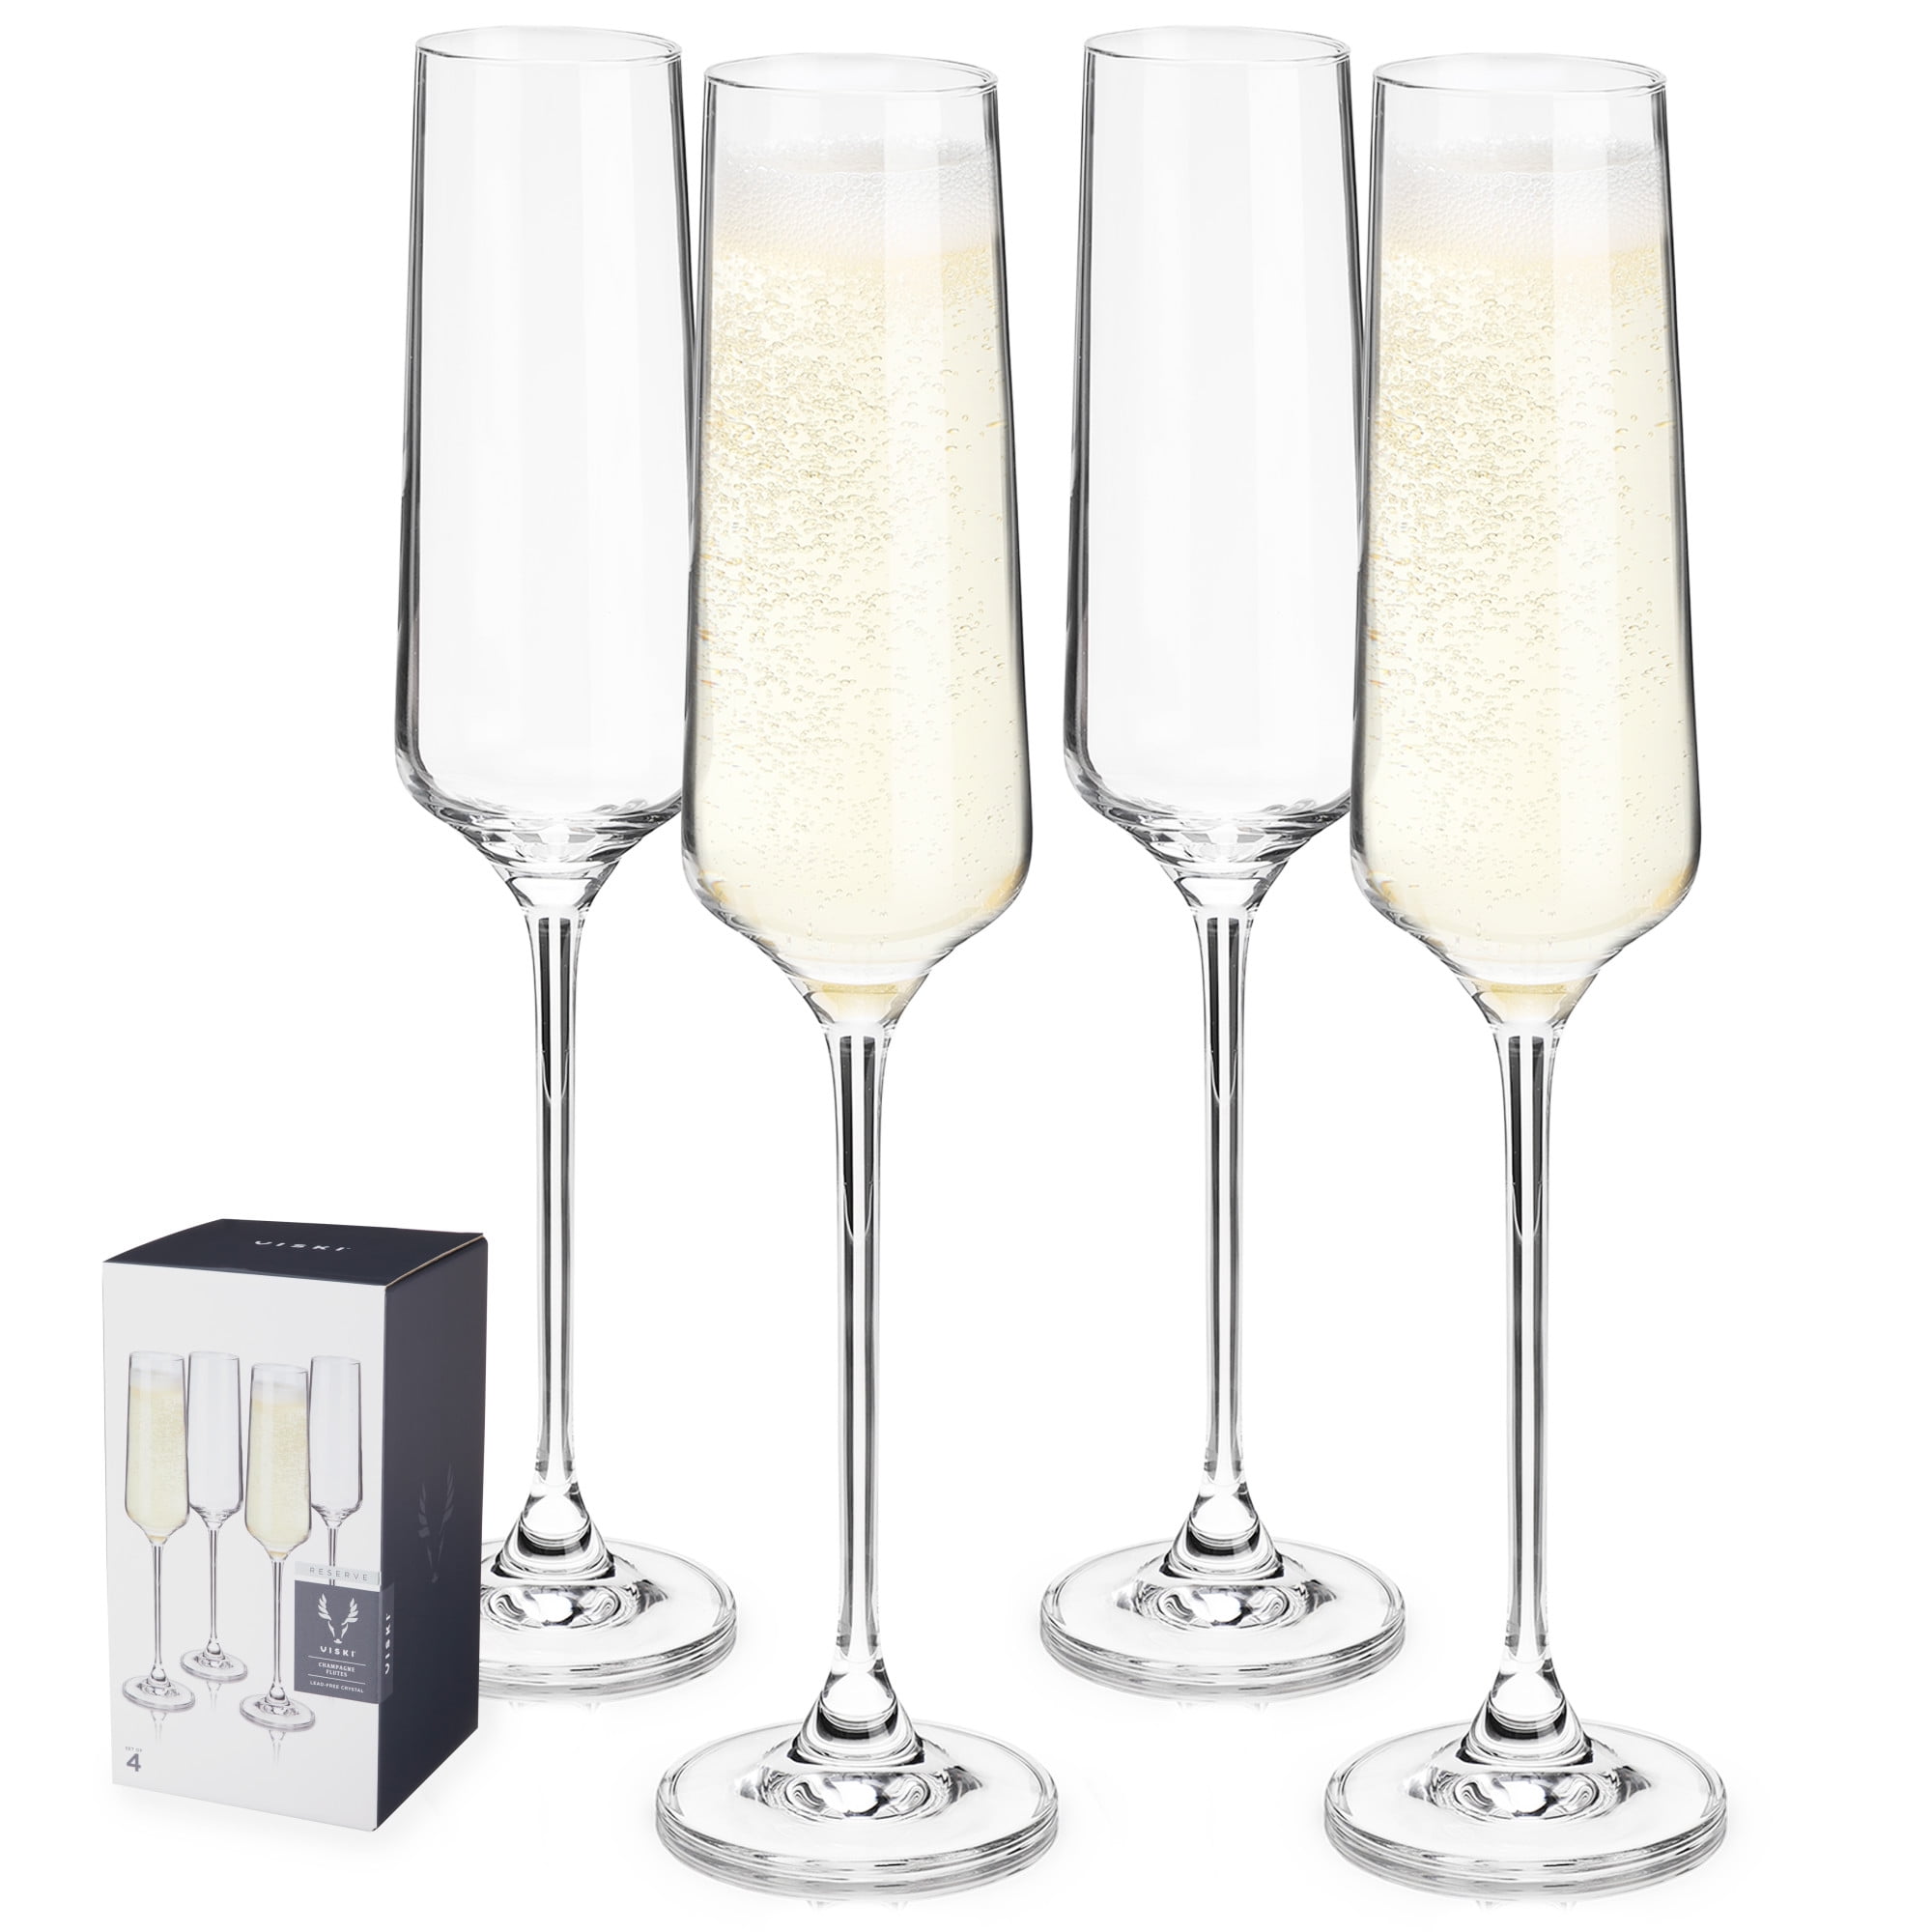 Dartington Wine Debut Flute Champagne Glasses Set of 4 